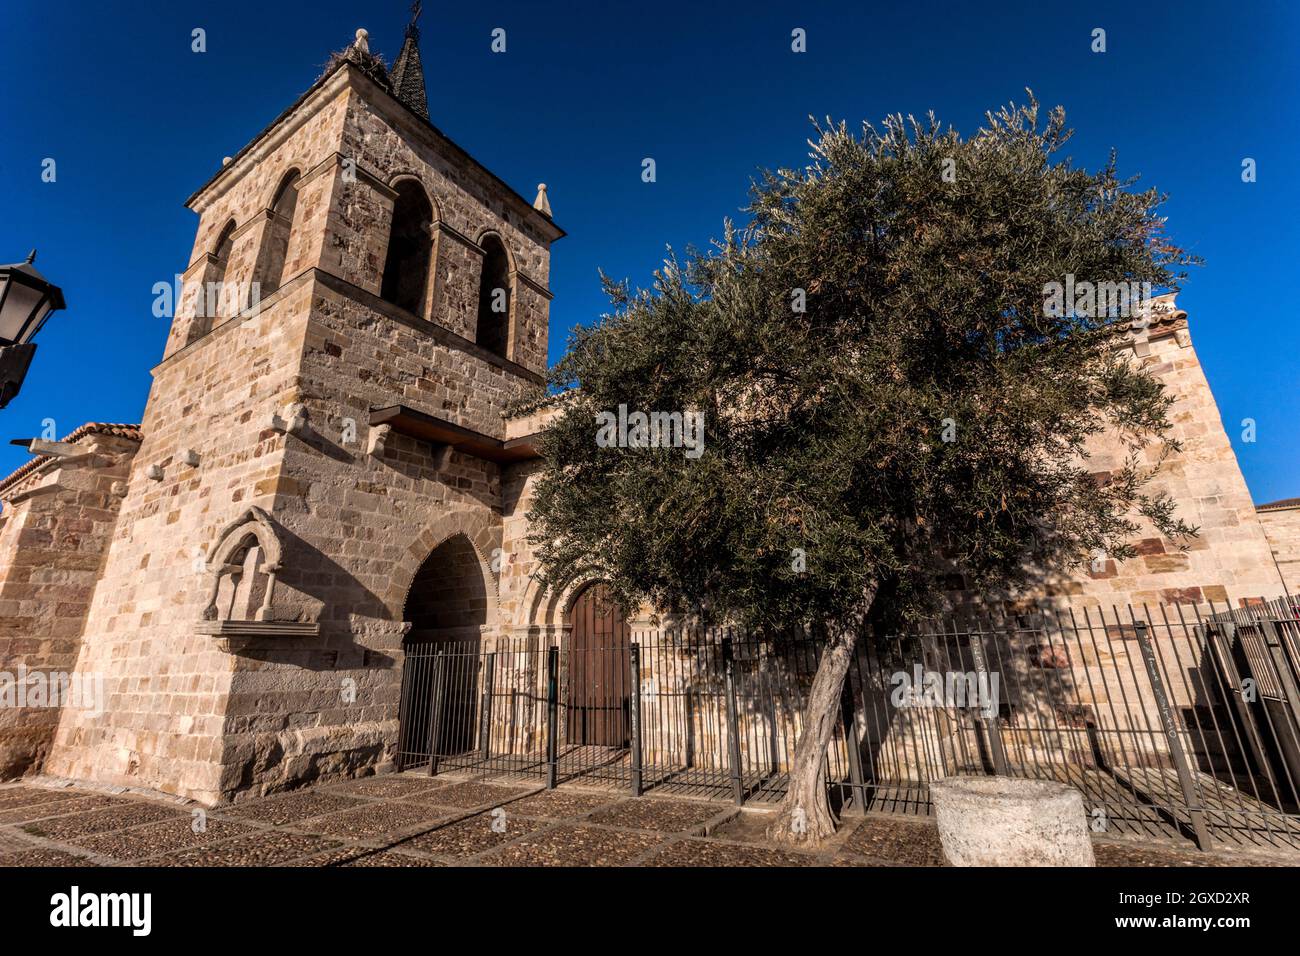 Iglesia de San Cipriano, Plaza de San Cipriano, Ciudad de Zamora, Provincia de Zamora, Castilla y León, España, Europa. Foto de stock